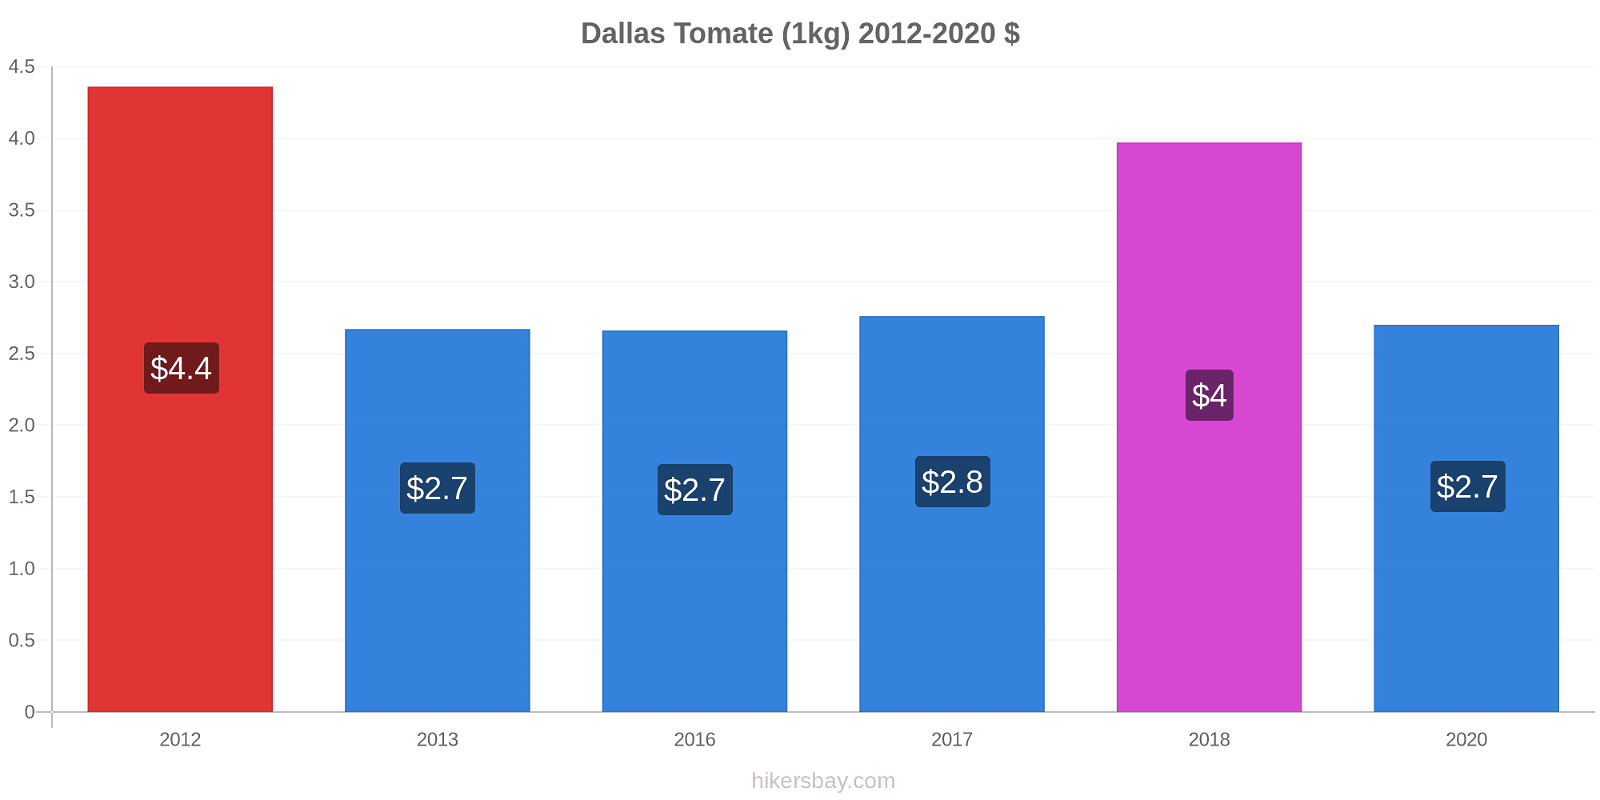 Dallas changements de prix Tomate (1kg) hikersbay.com